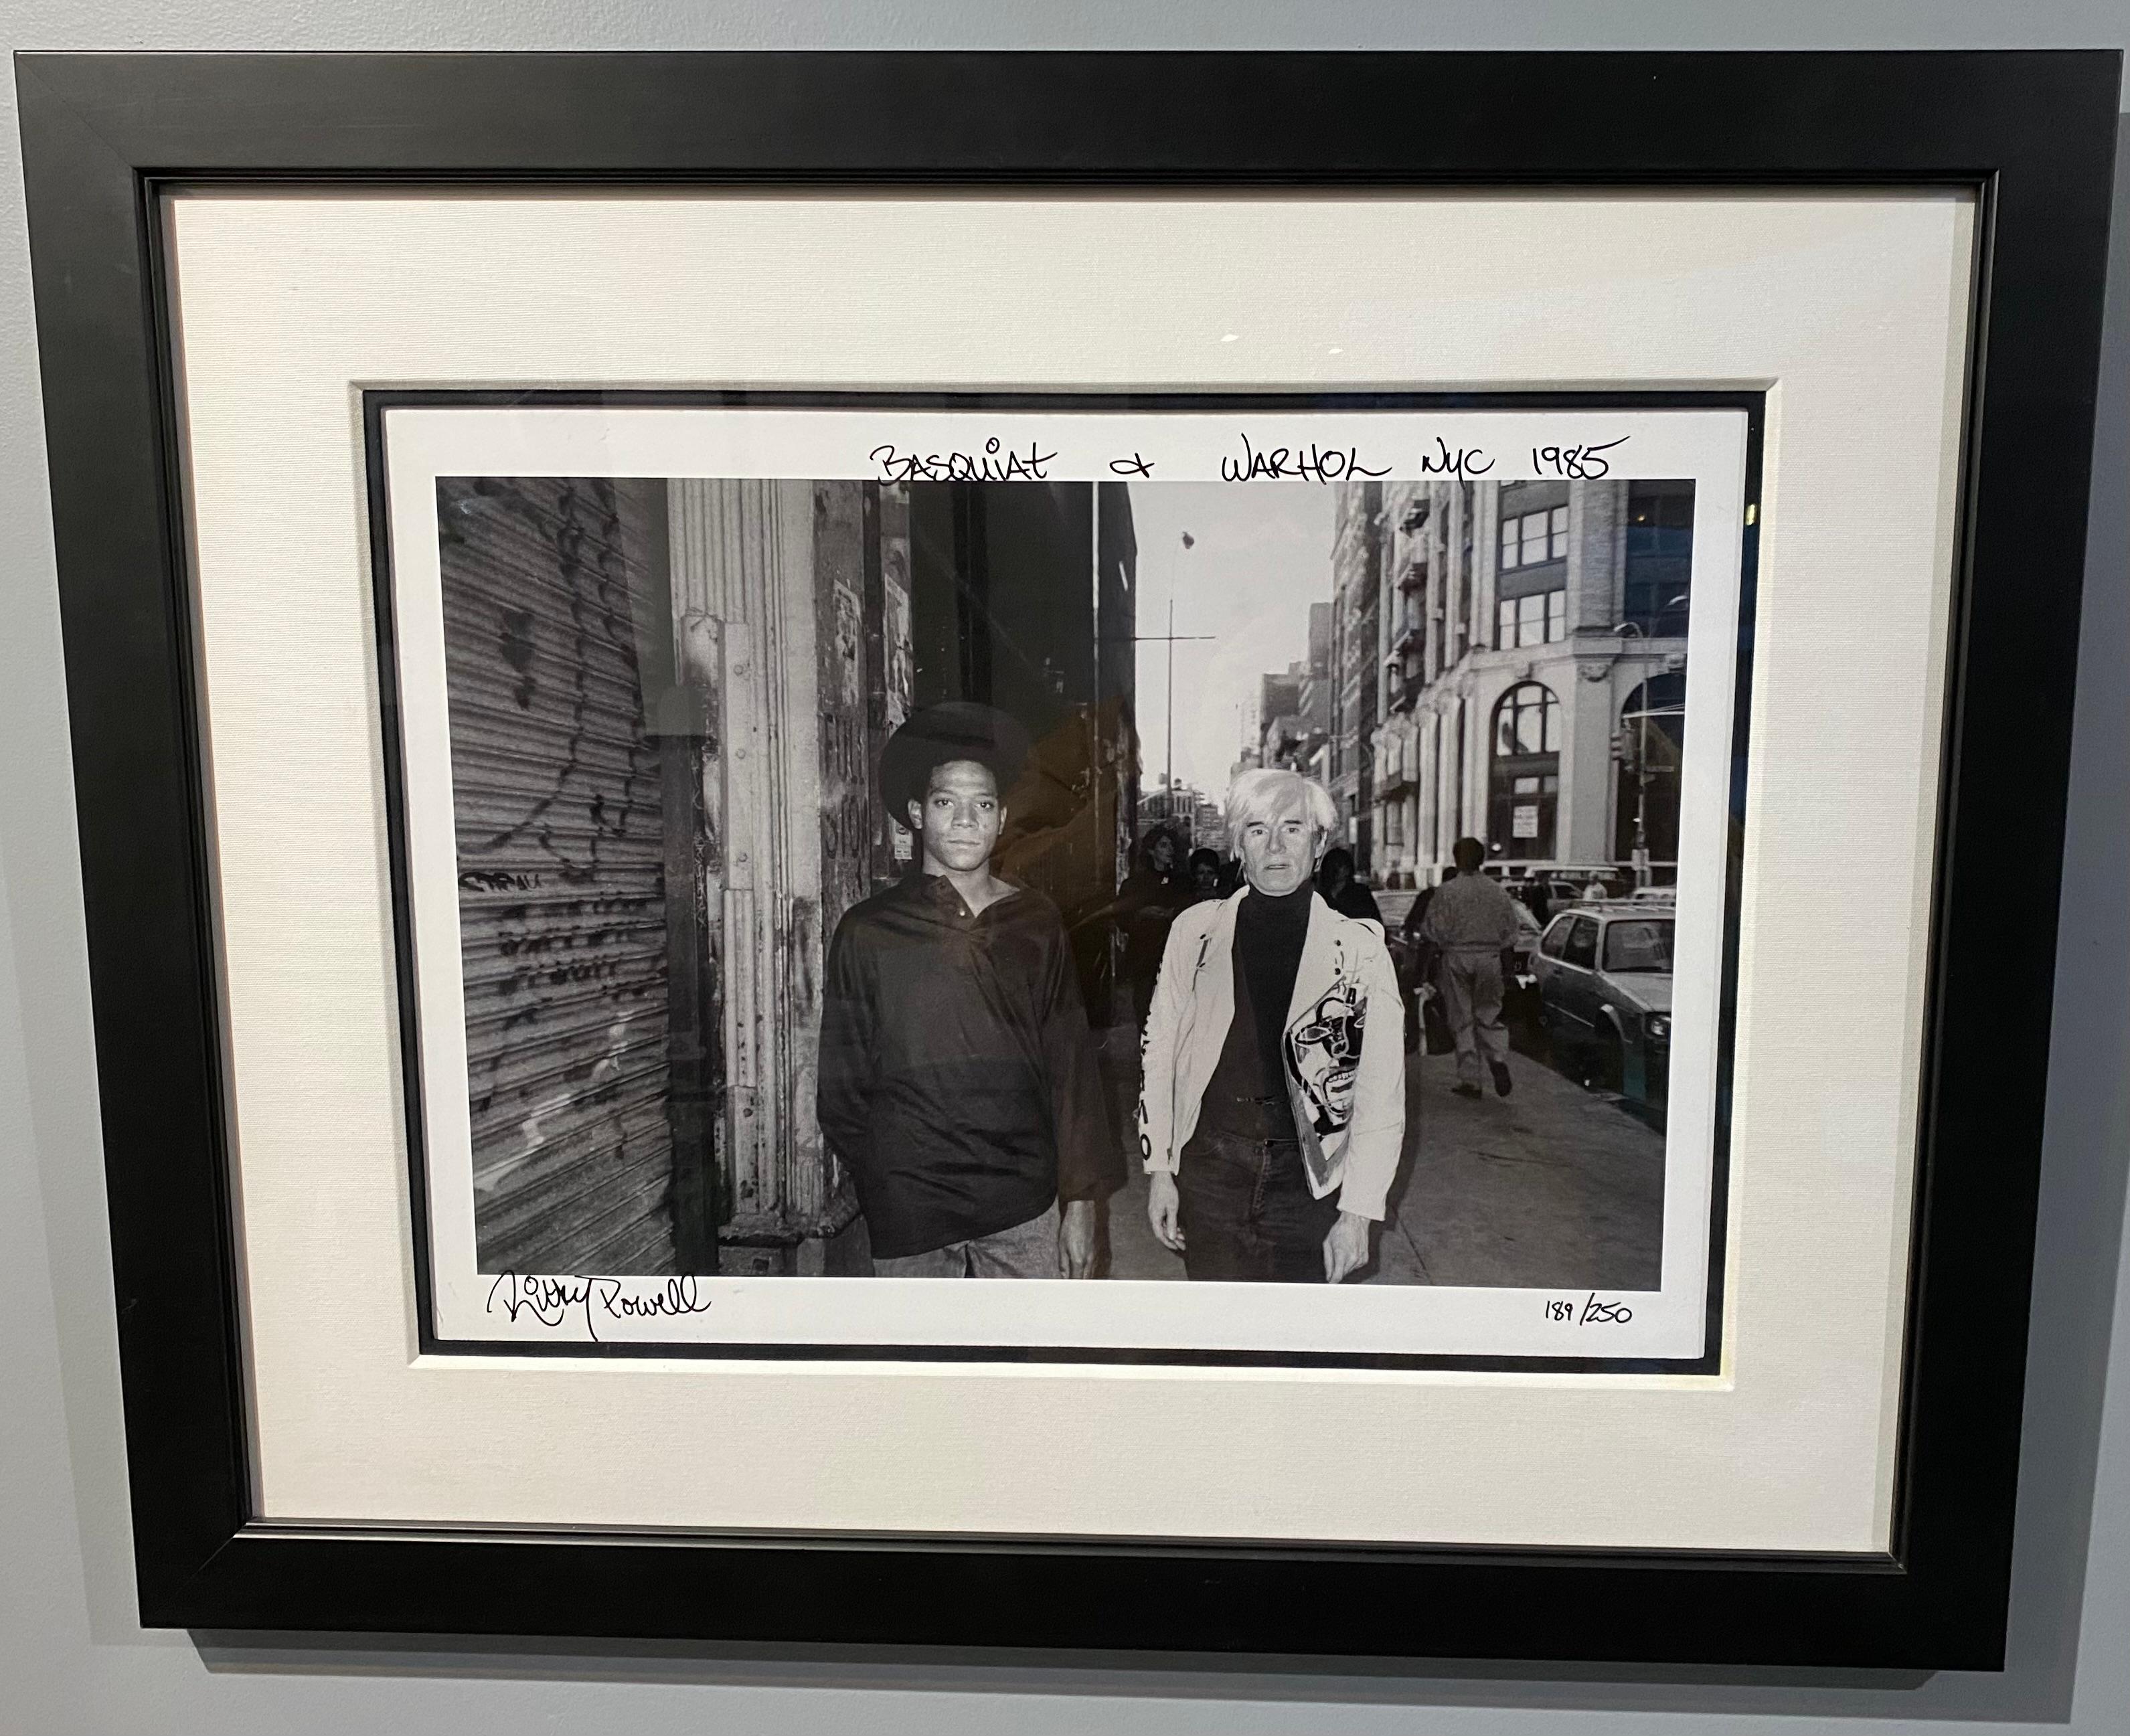 Basquiat & Warhol NYC